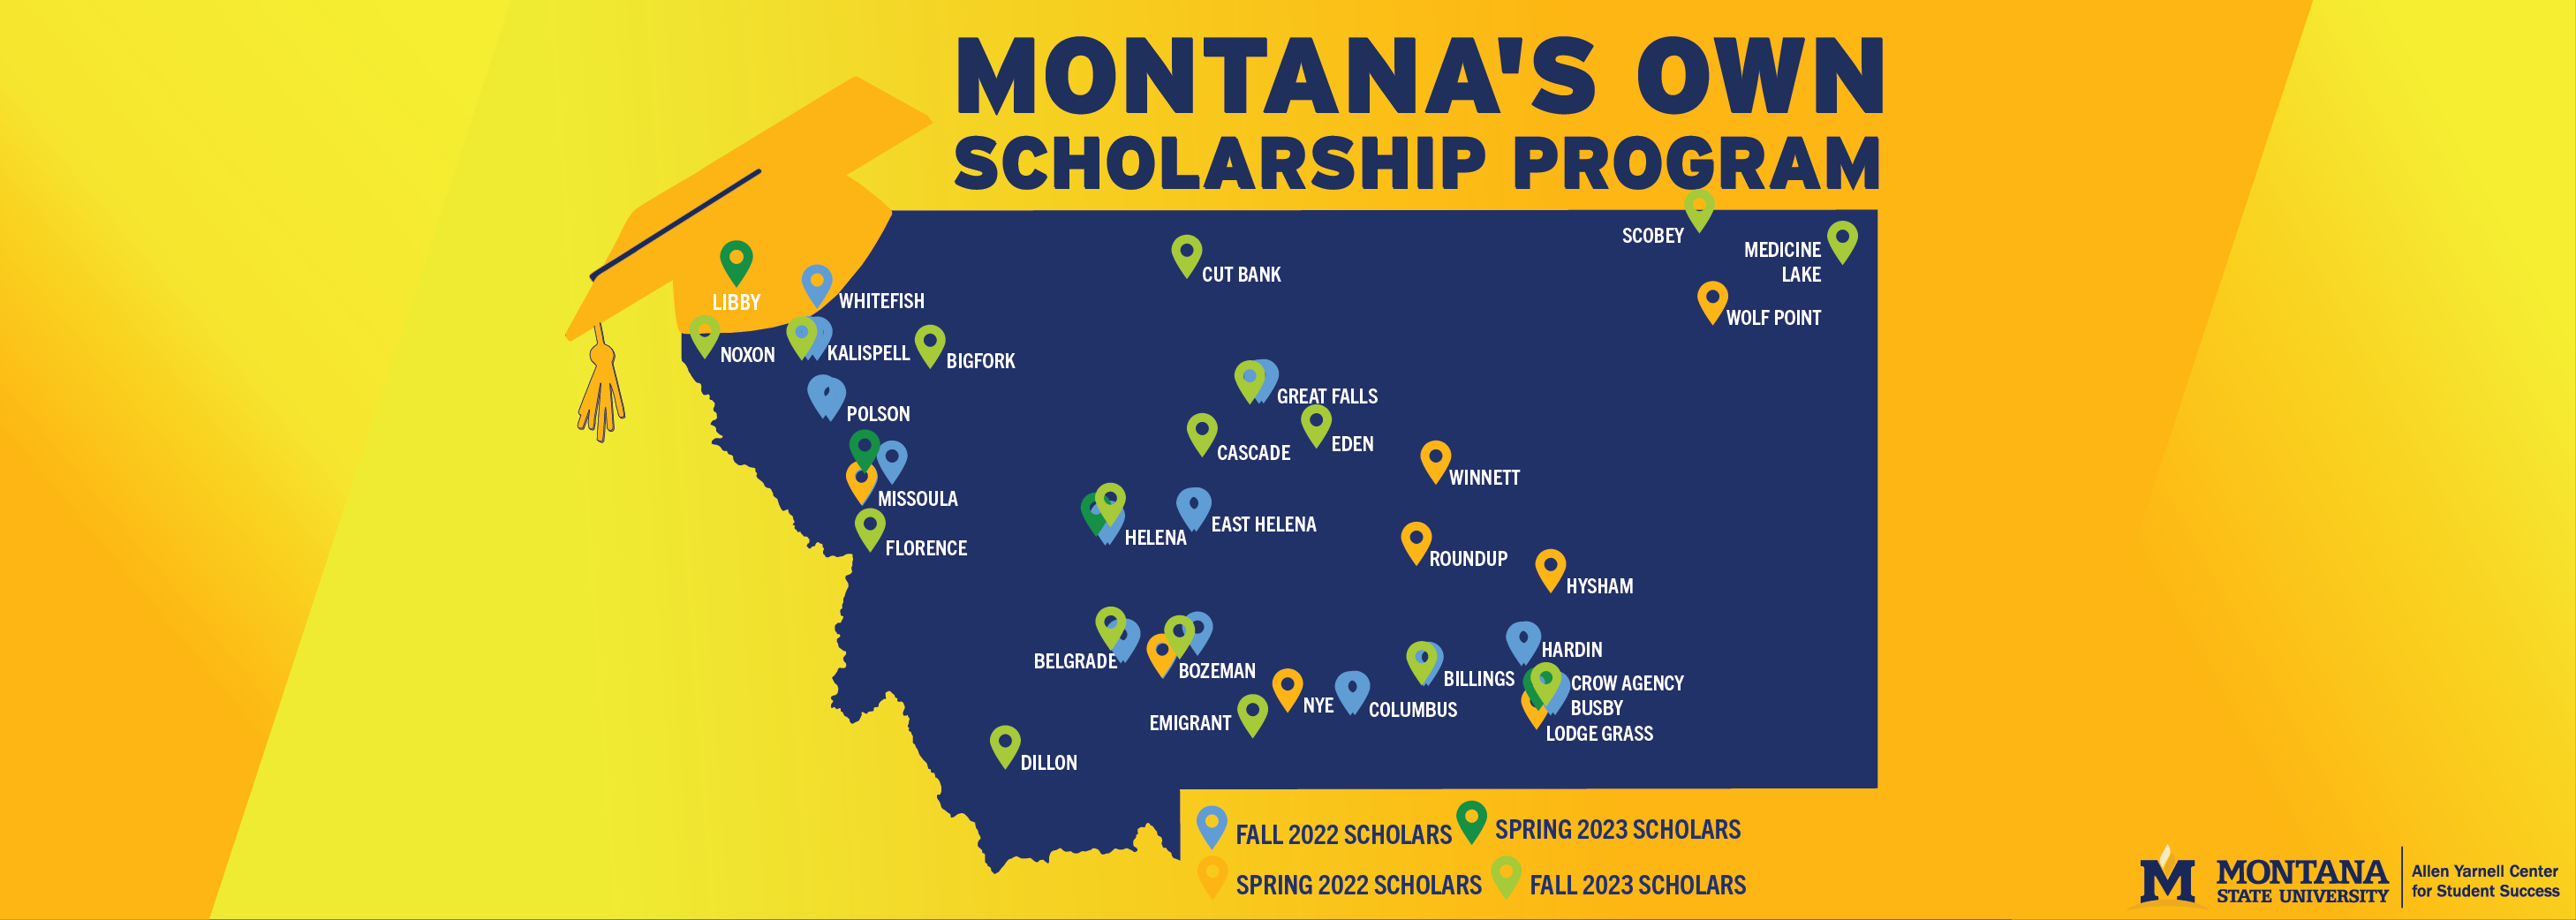 Montana's Own Scholarship Program